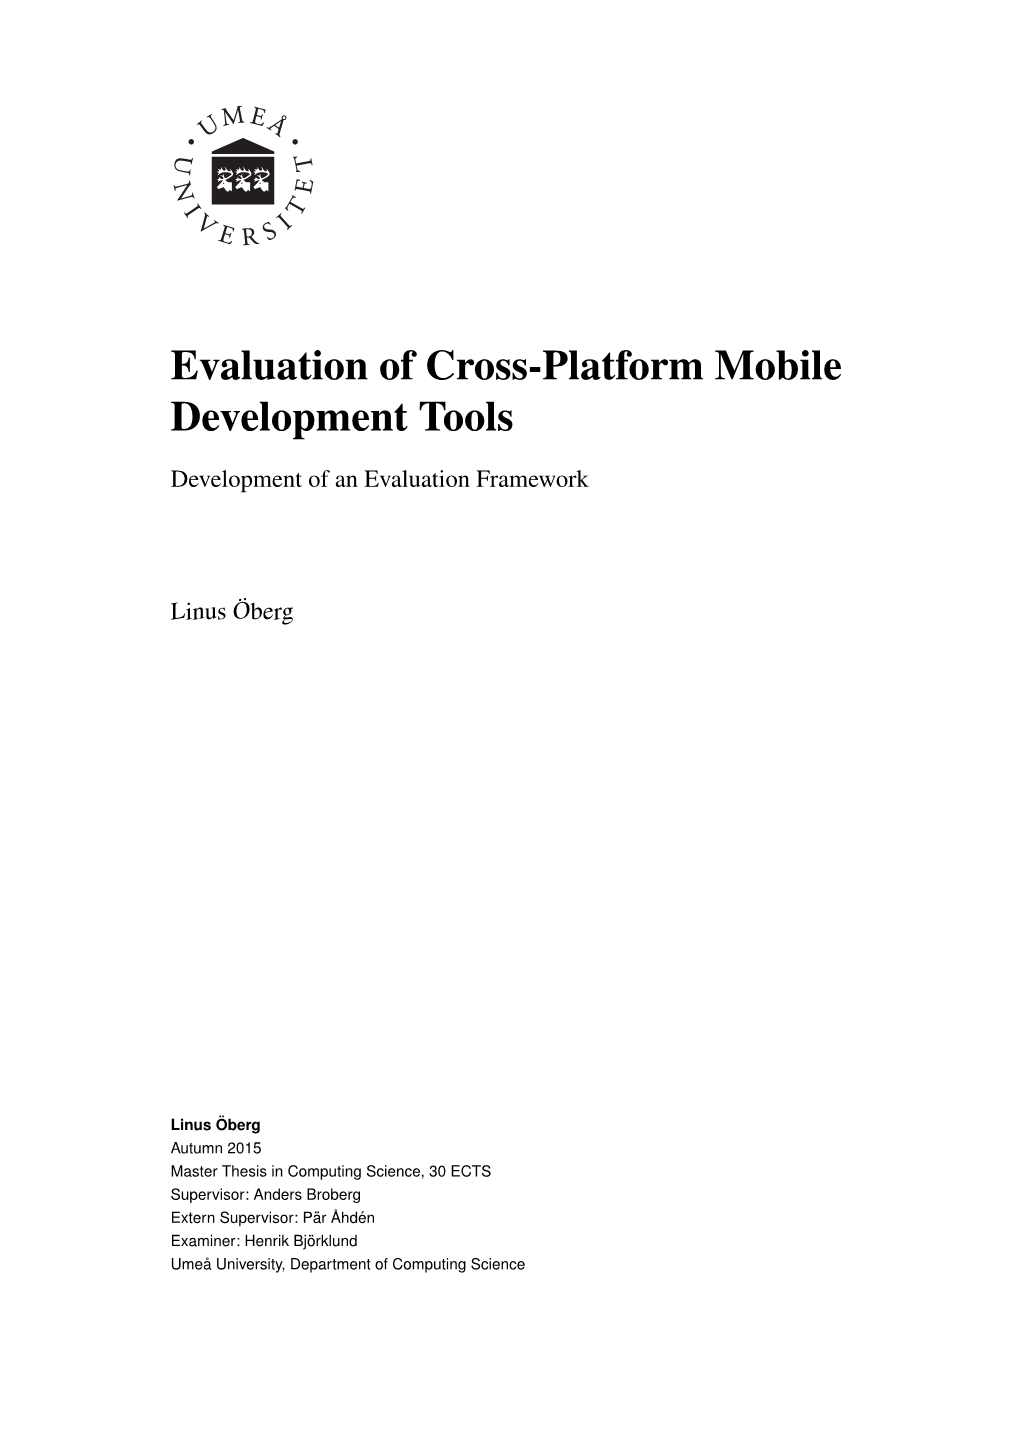 Evaluation of Cross-Platform Mobile Development Tools